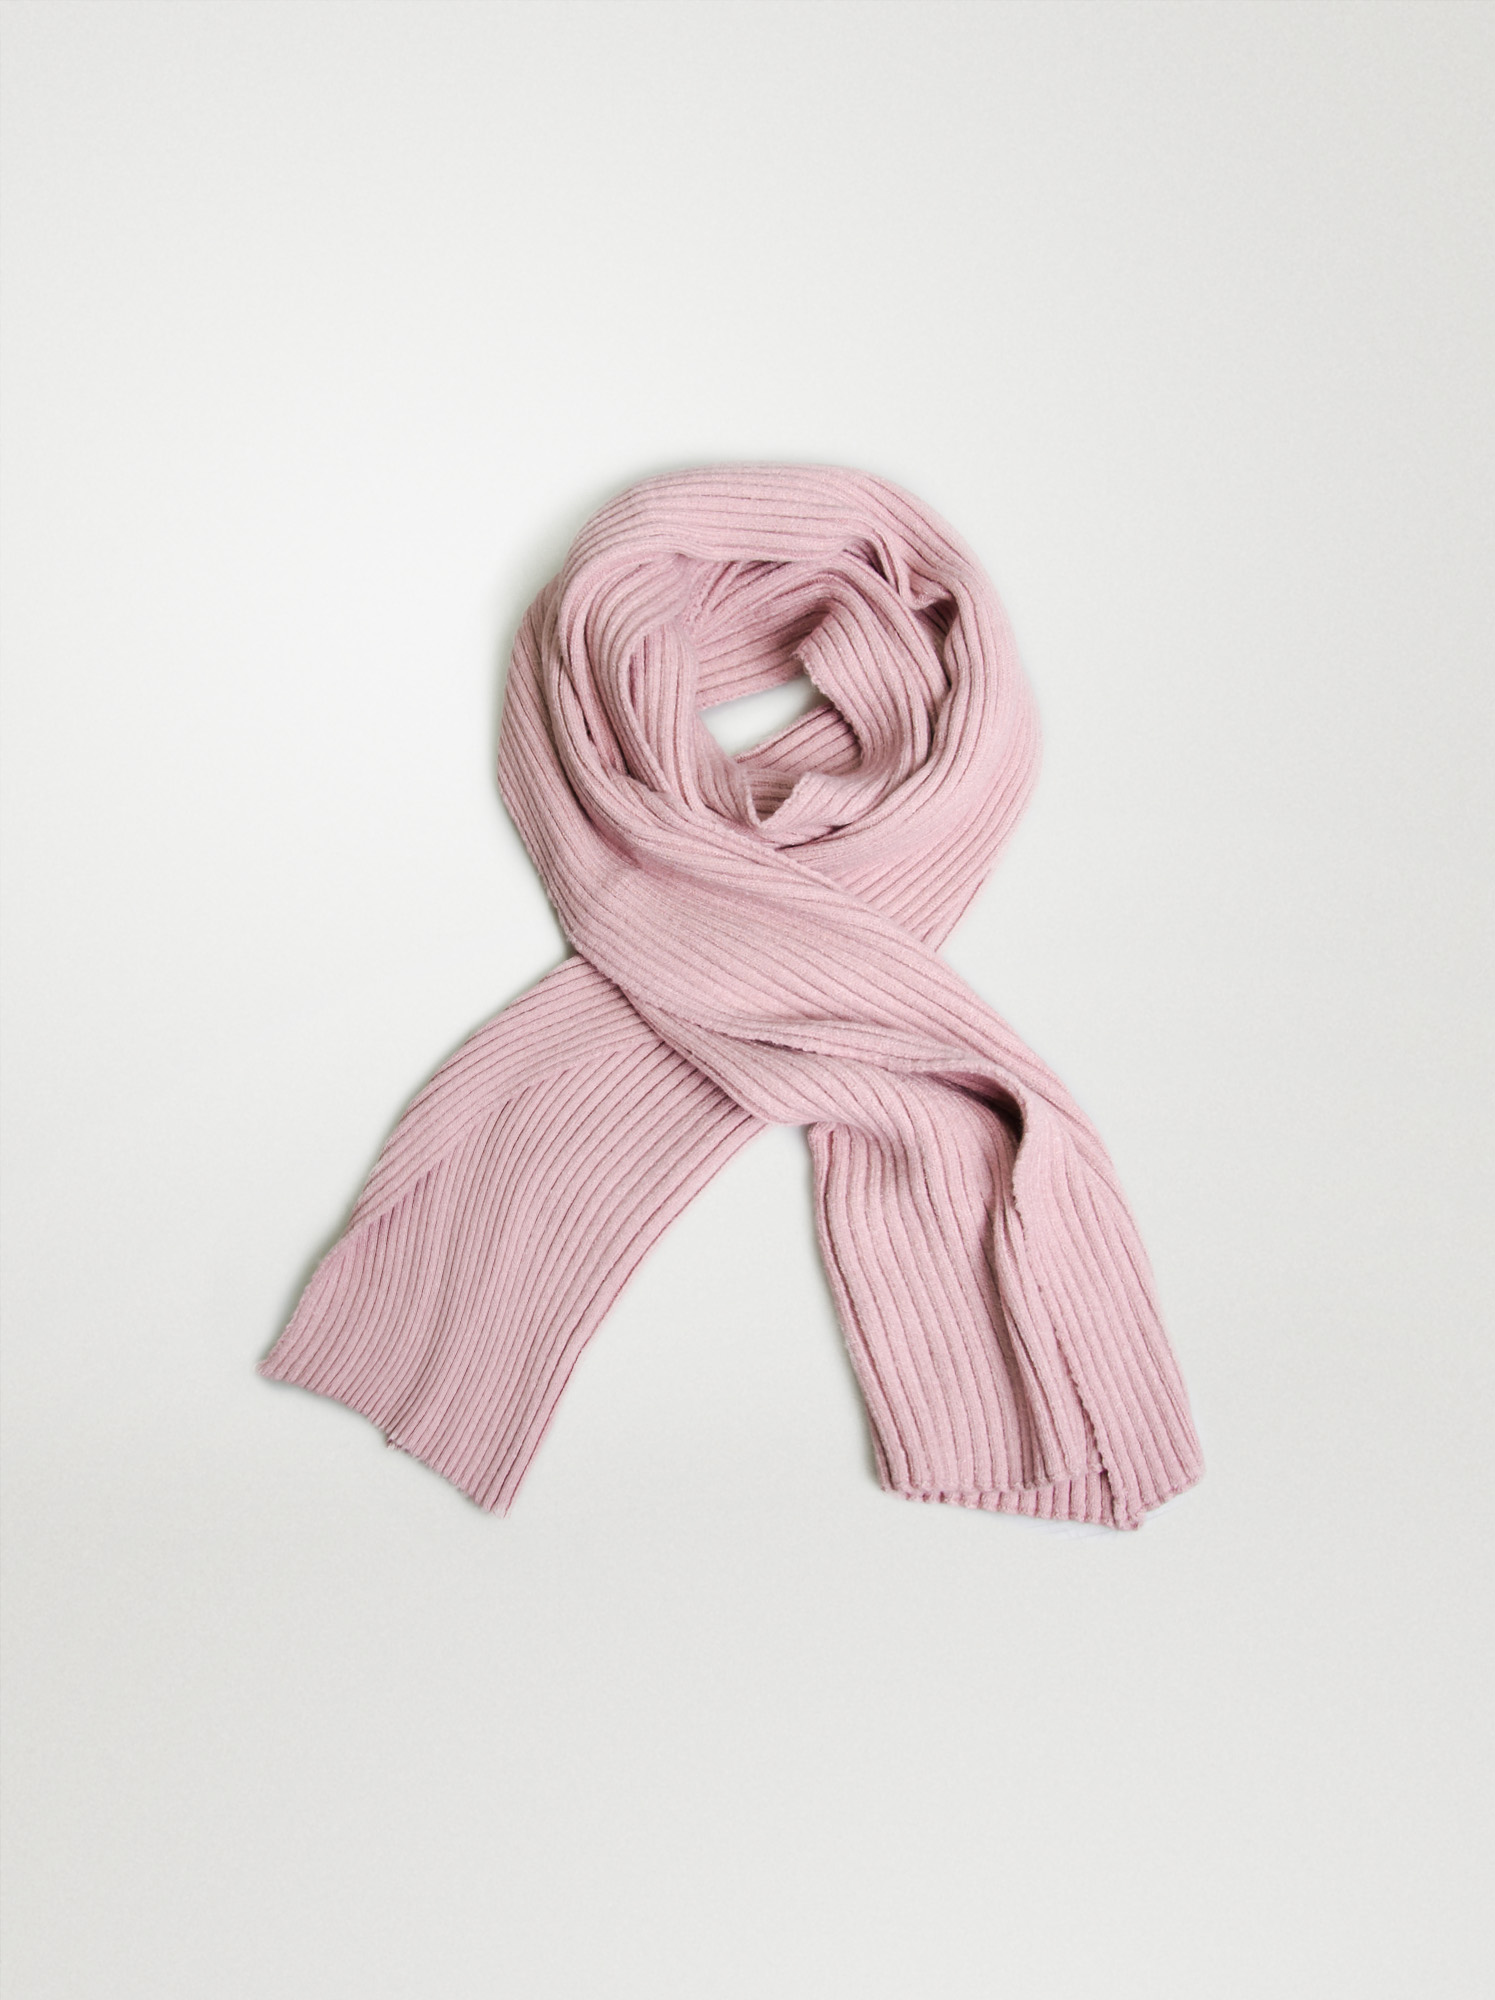 Pink scarf - Allora image 1